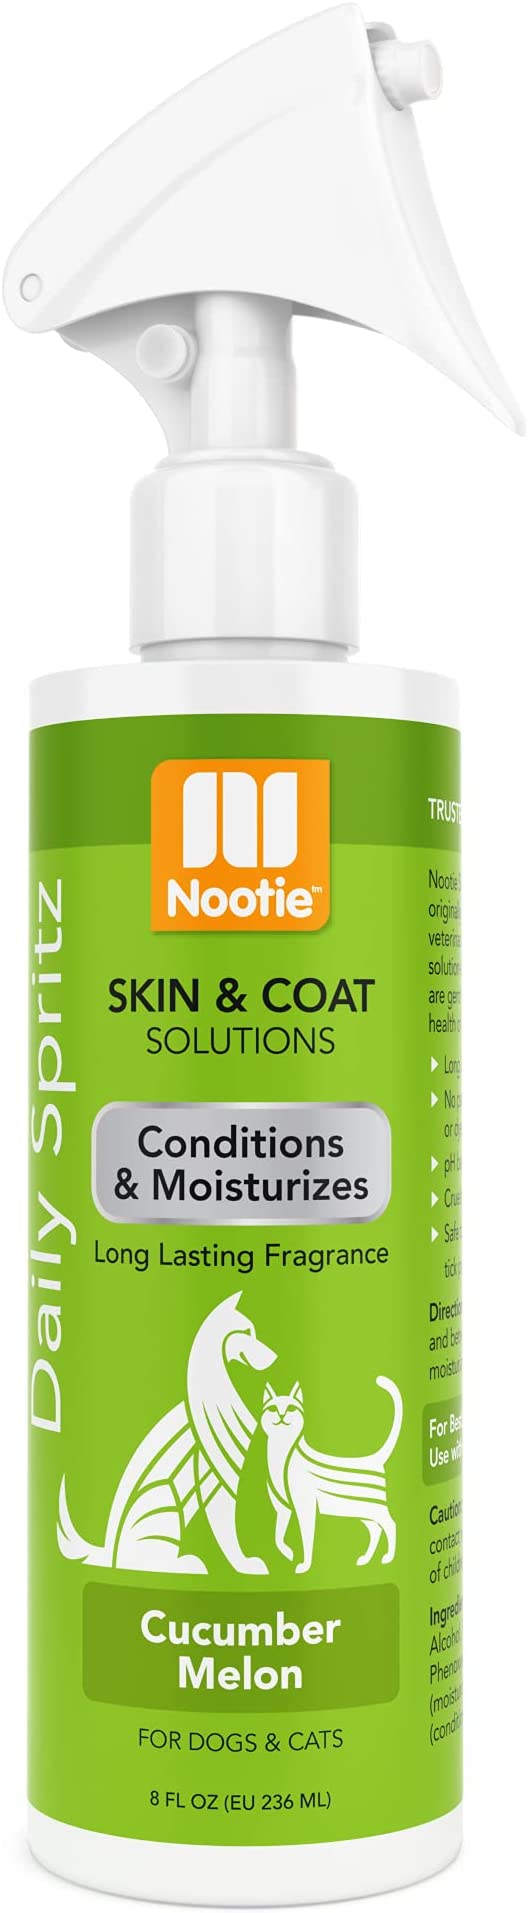 Nootie Daily Spritz Pet Conditioning Spray - Dog Conditioner for Sensitive Skin